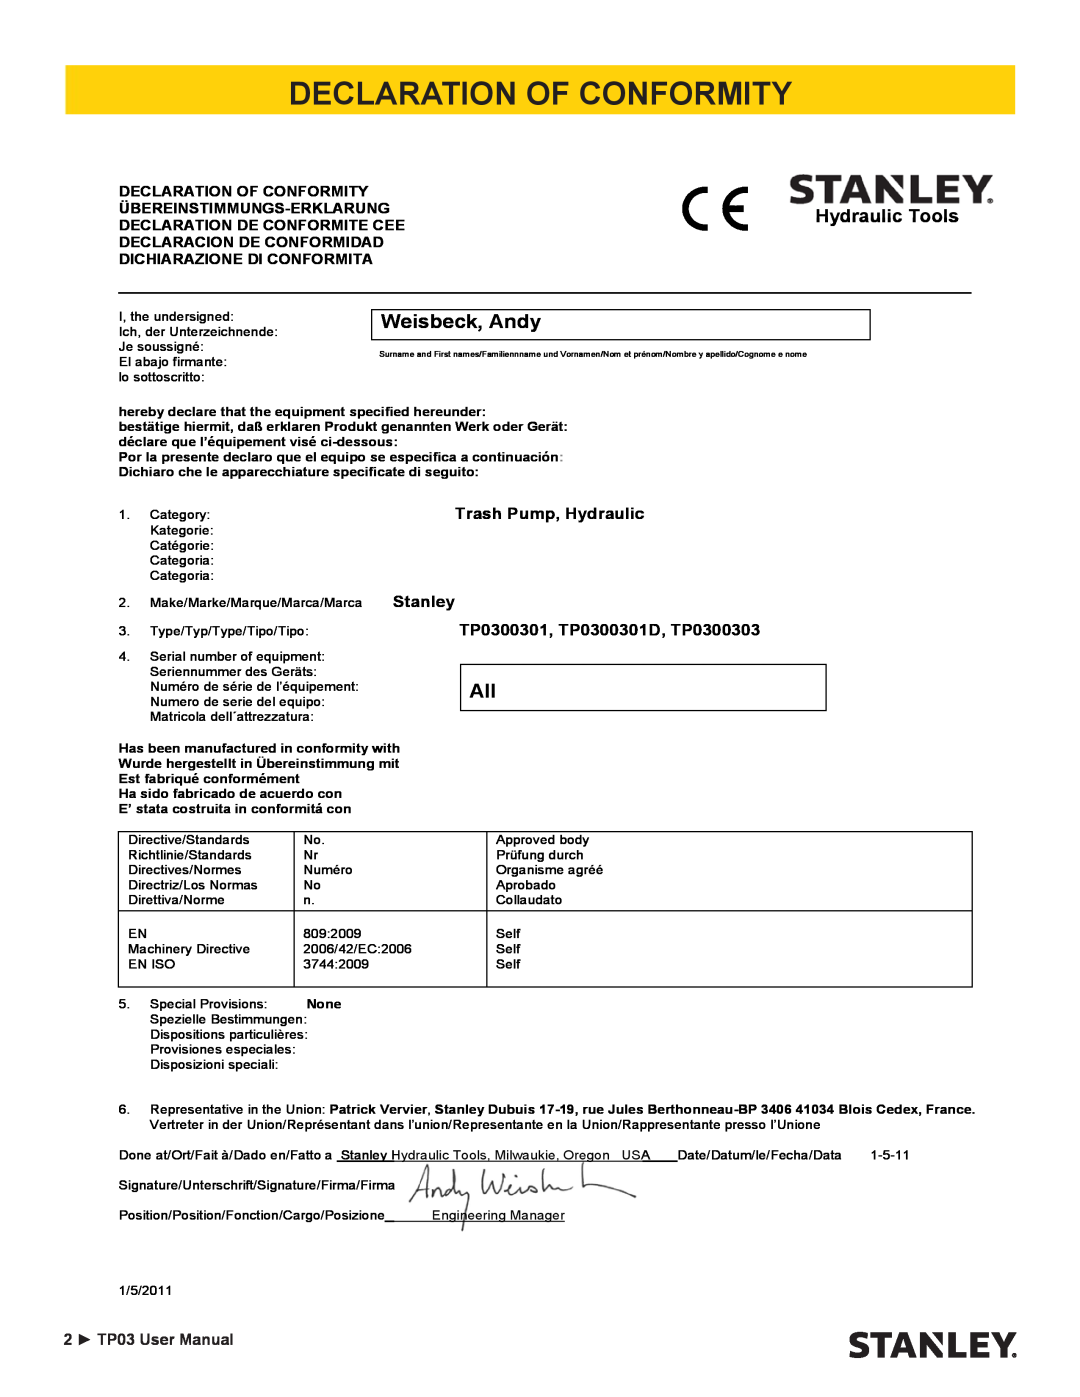 Stanley Black & Decker TP03 user manual Declaration Of Conformity, Weisbeck, Andy, Trash Pump, Hydraulic, Stanley 